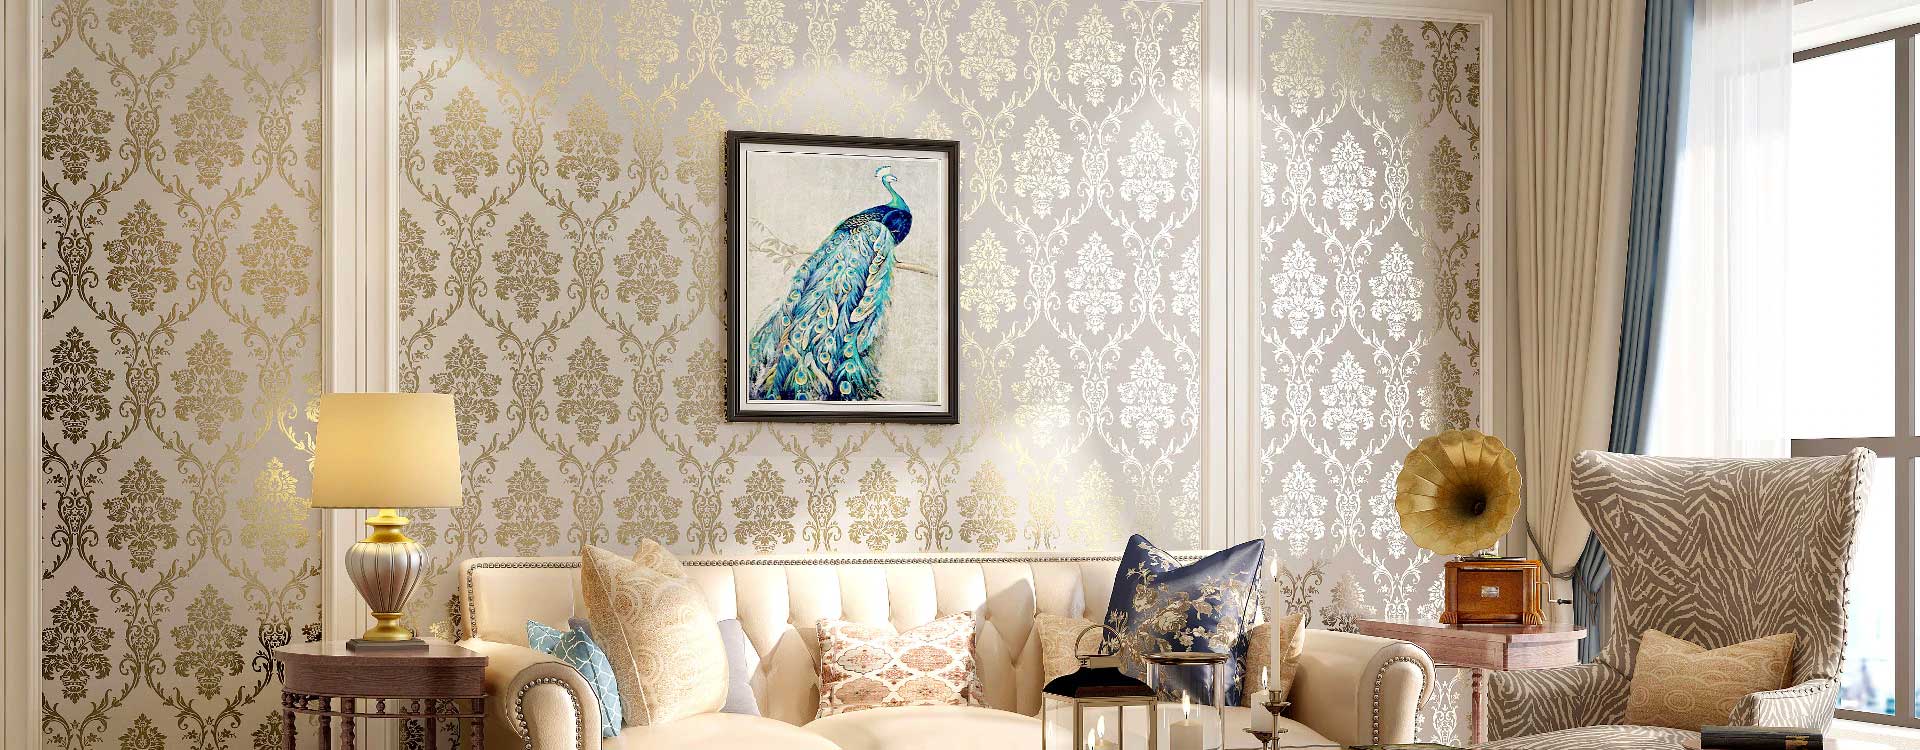 floral wallpaper australia,living room,room,interior design,wall,wallpaper